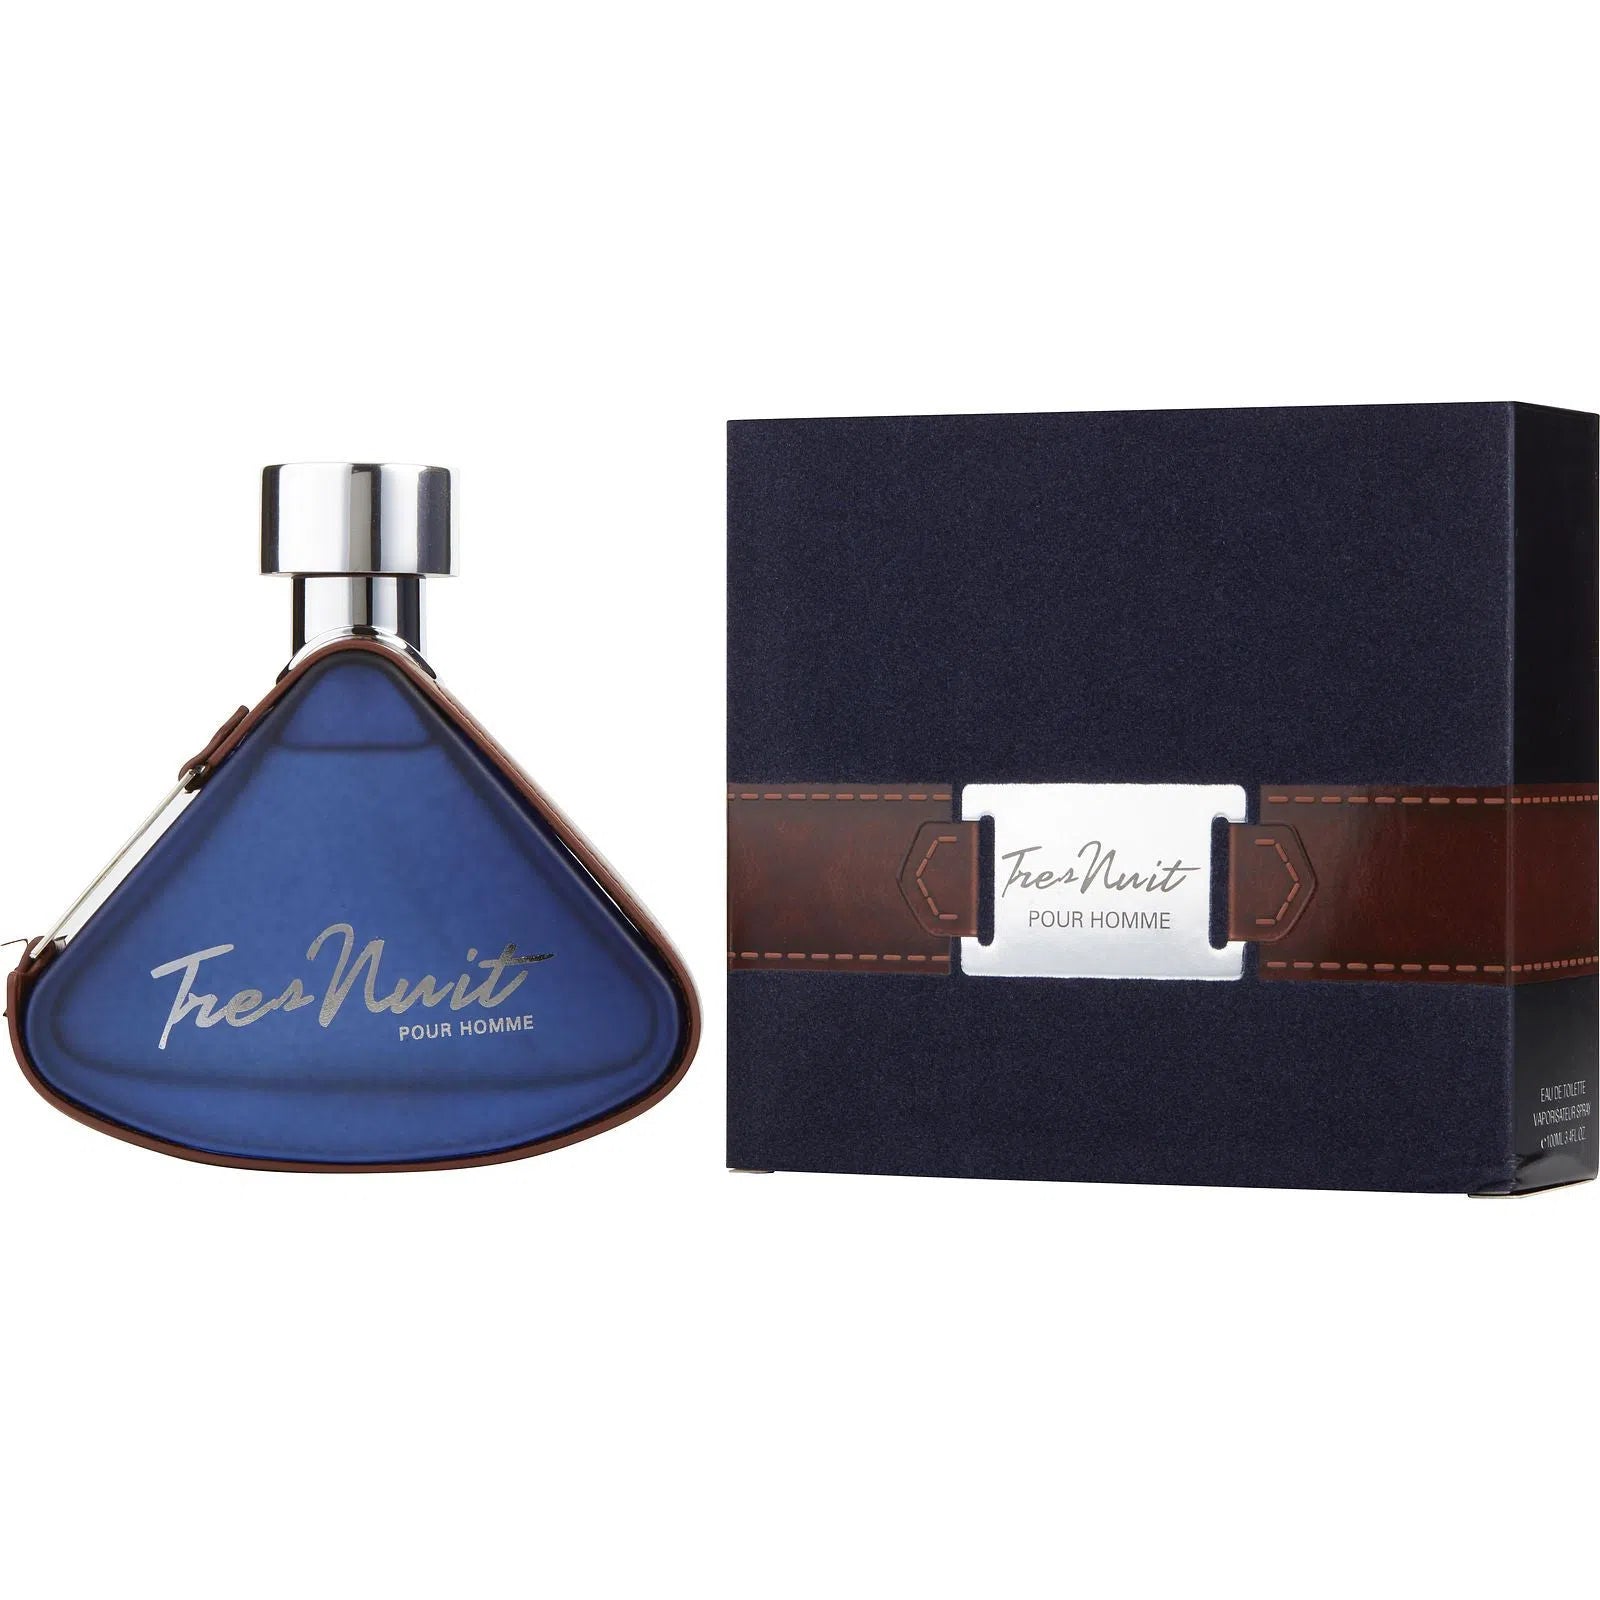 Perfume Armaf Tres Nuit EDT (M) / 100 ml - 6085010094663- Prive Perfumes Honduras